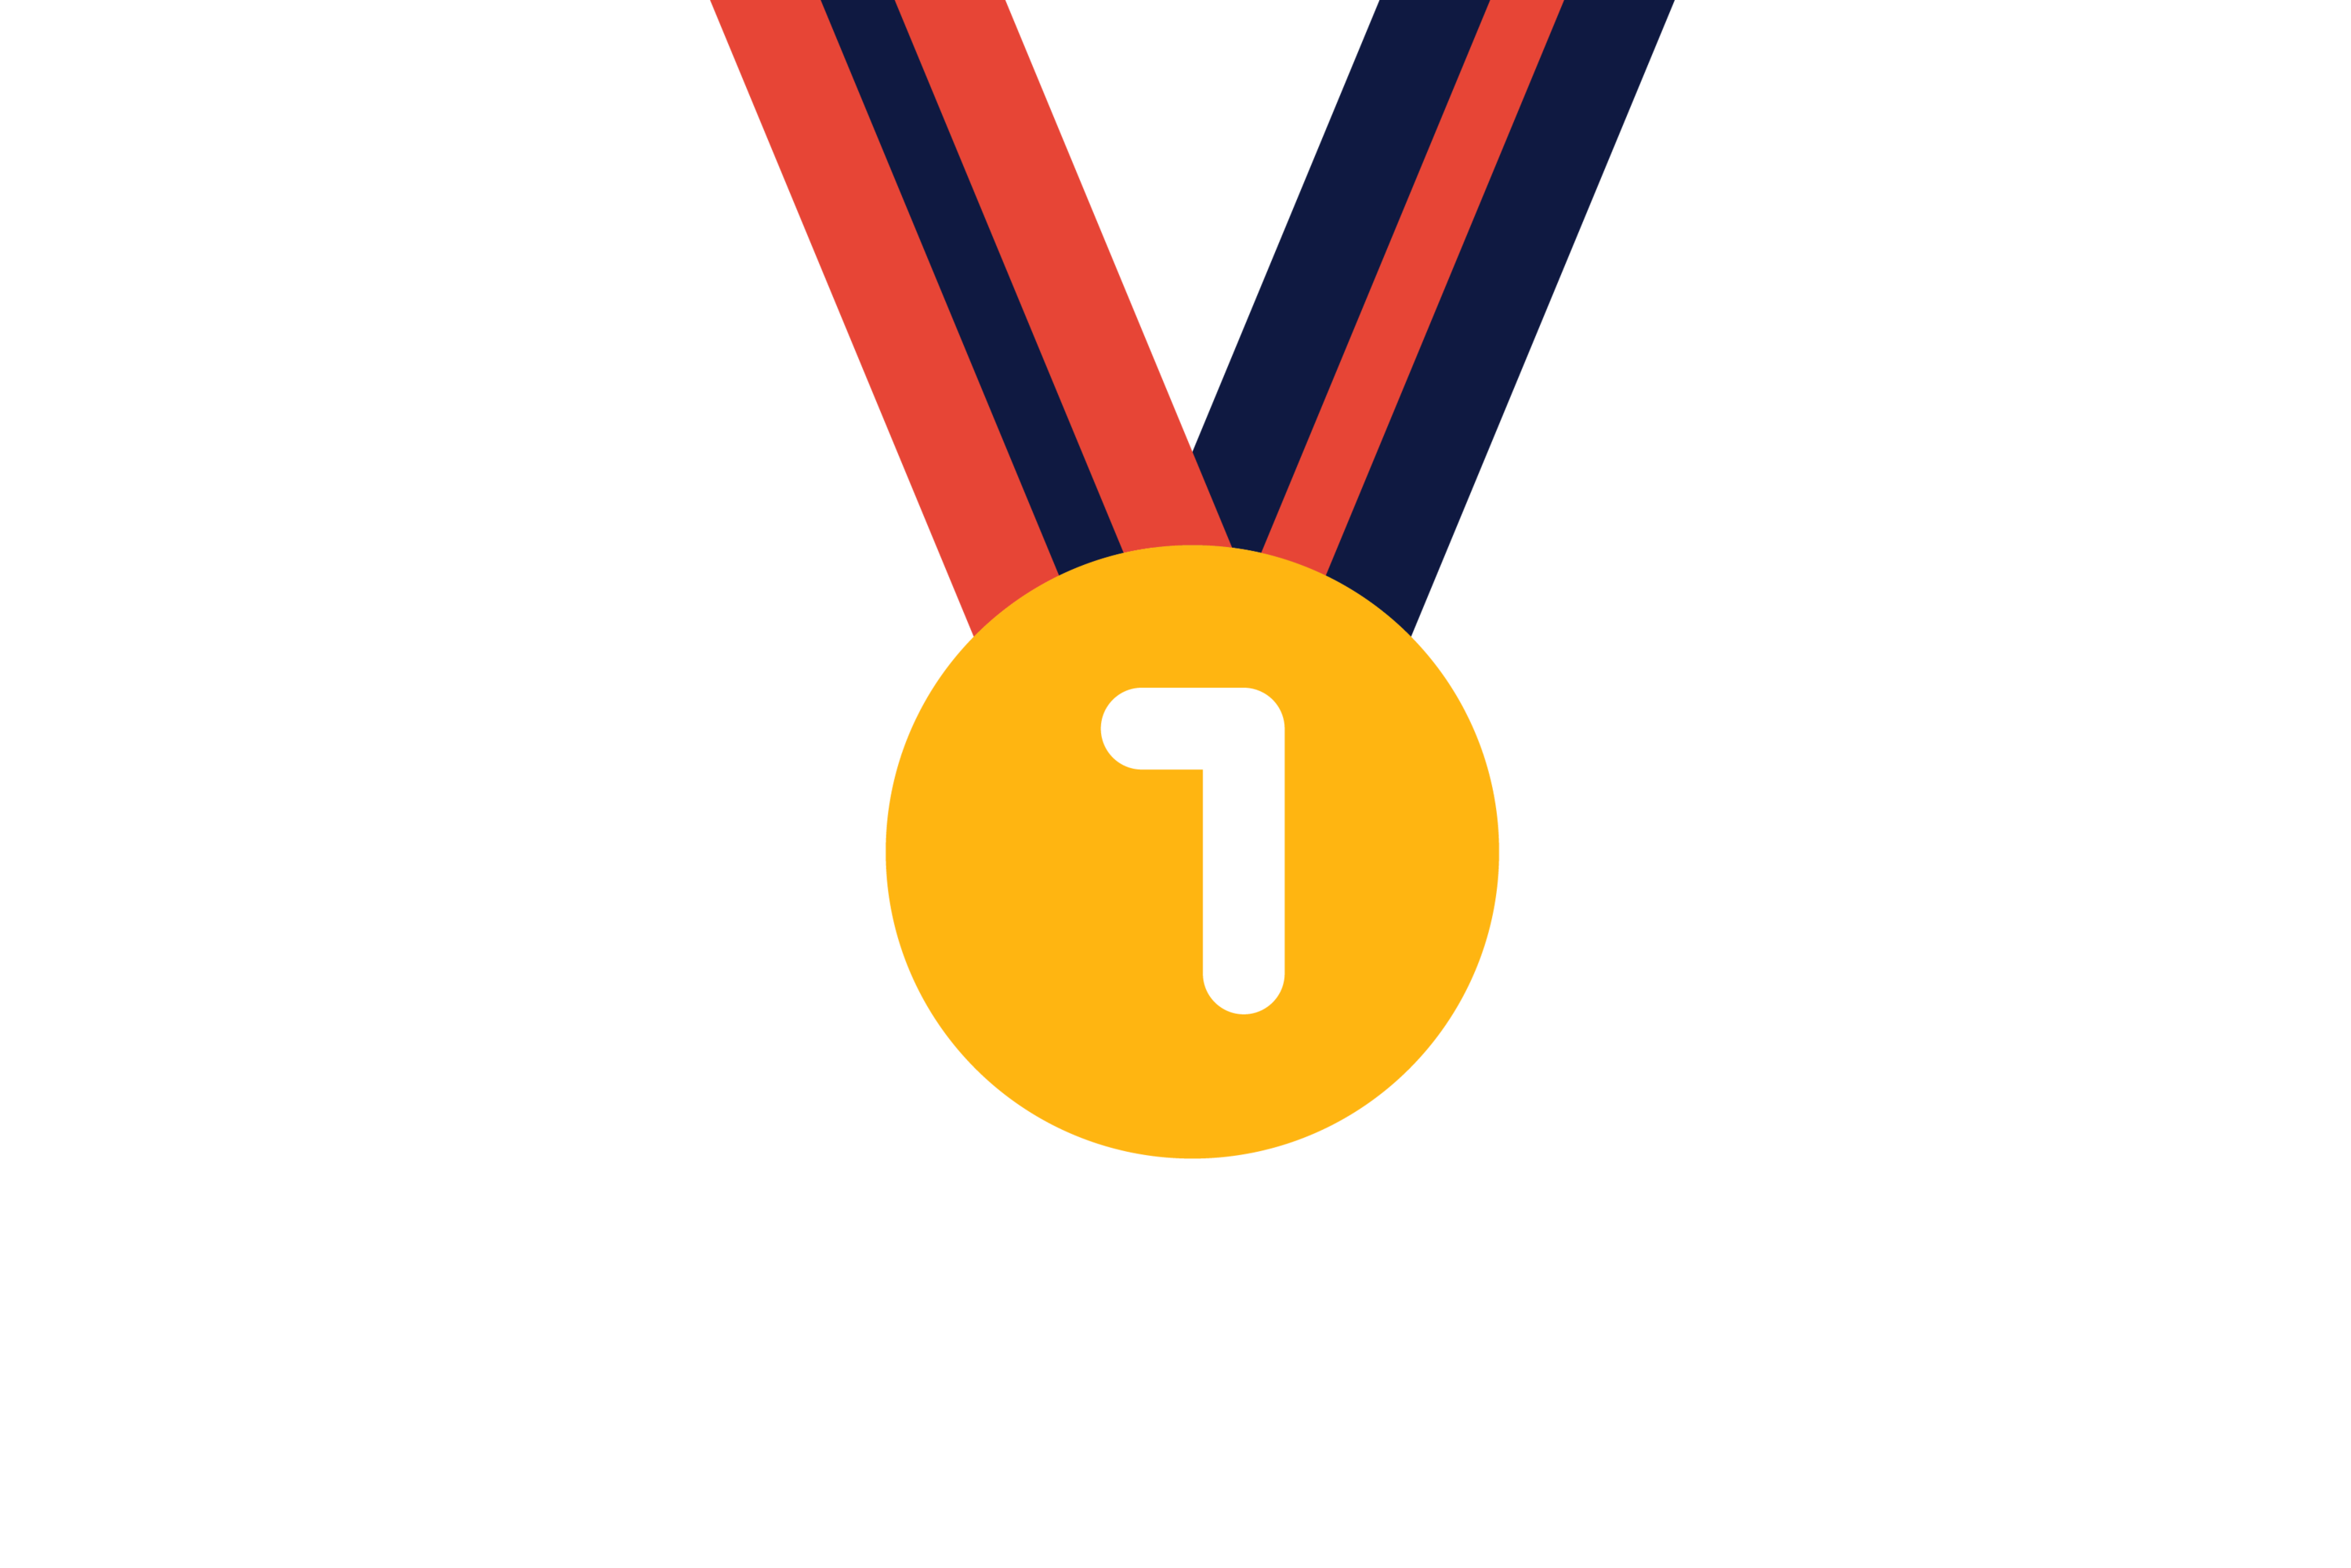 Medal no. 1